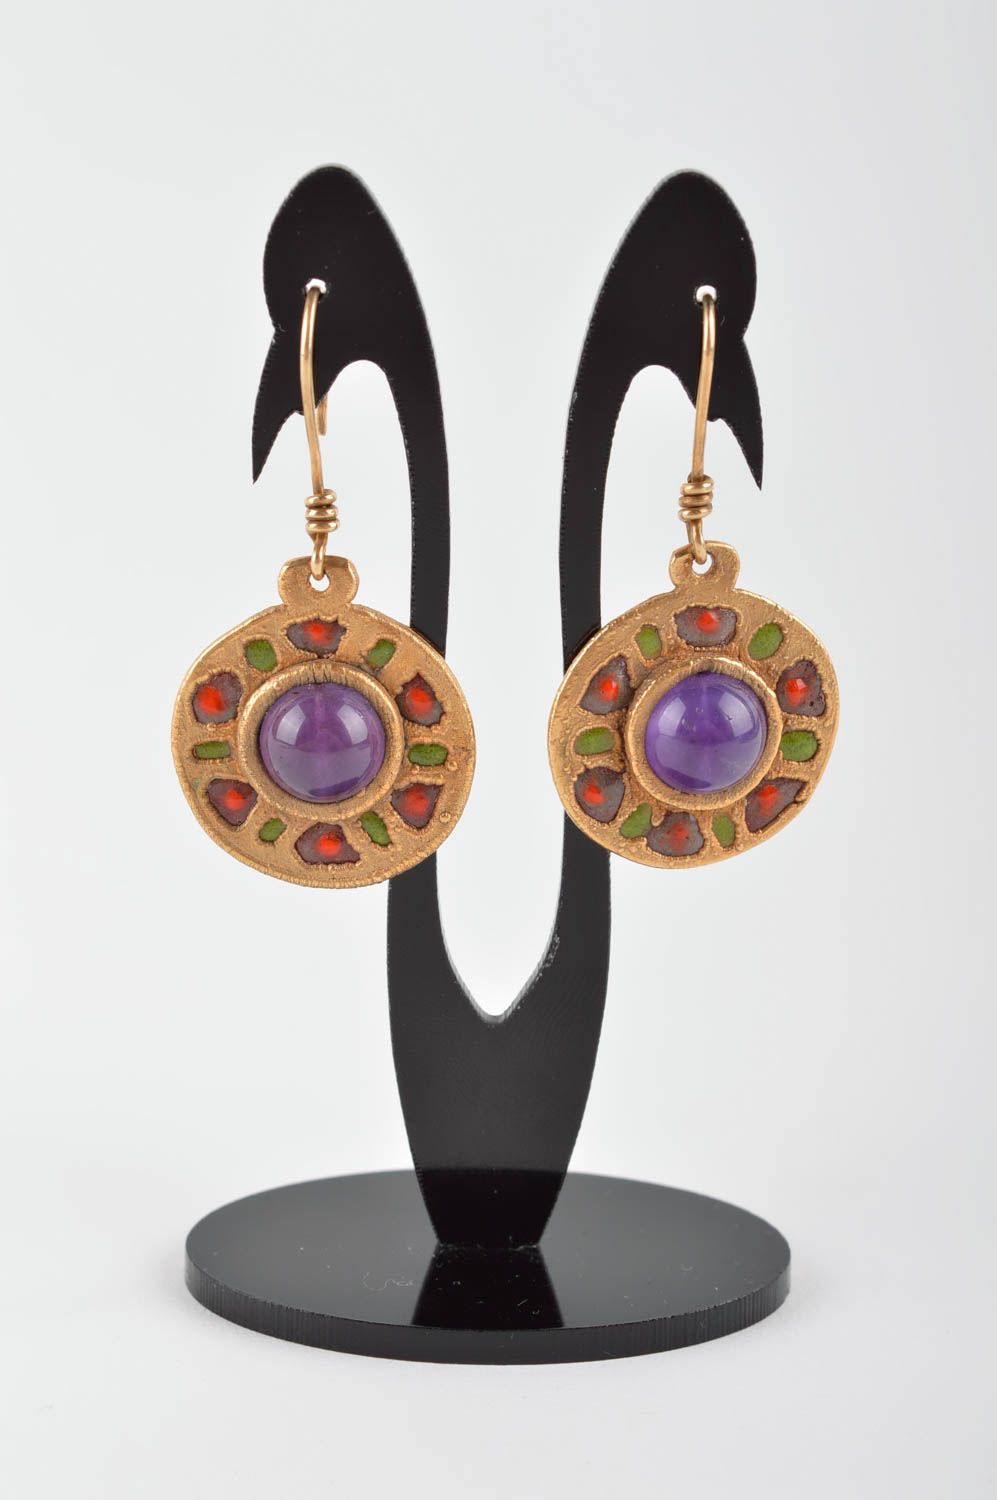 Handmade metal earrings gemstone earrings for girls cool jewelry gifts for her photo 2